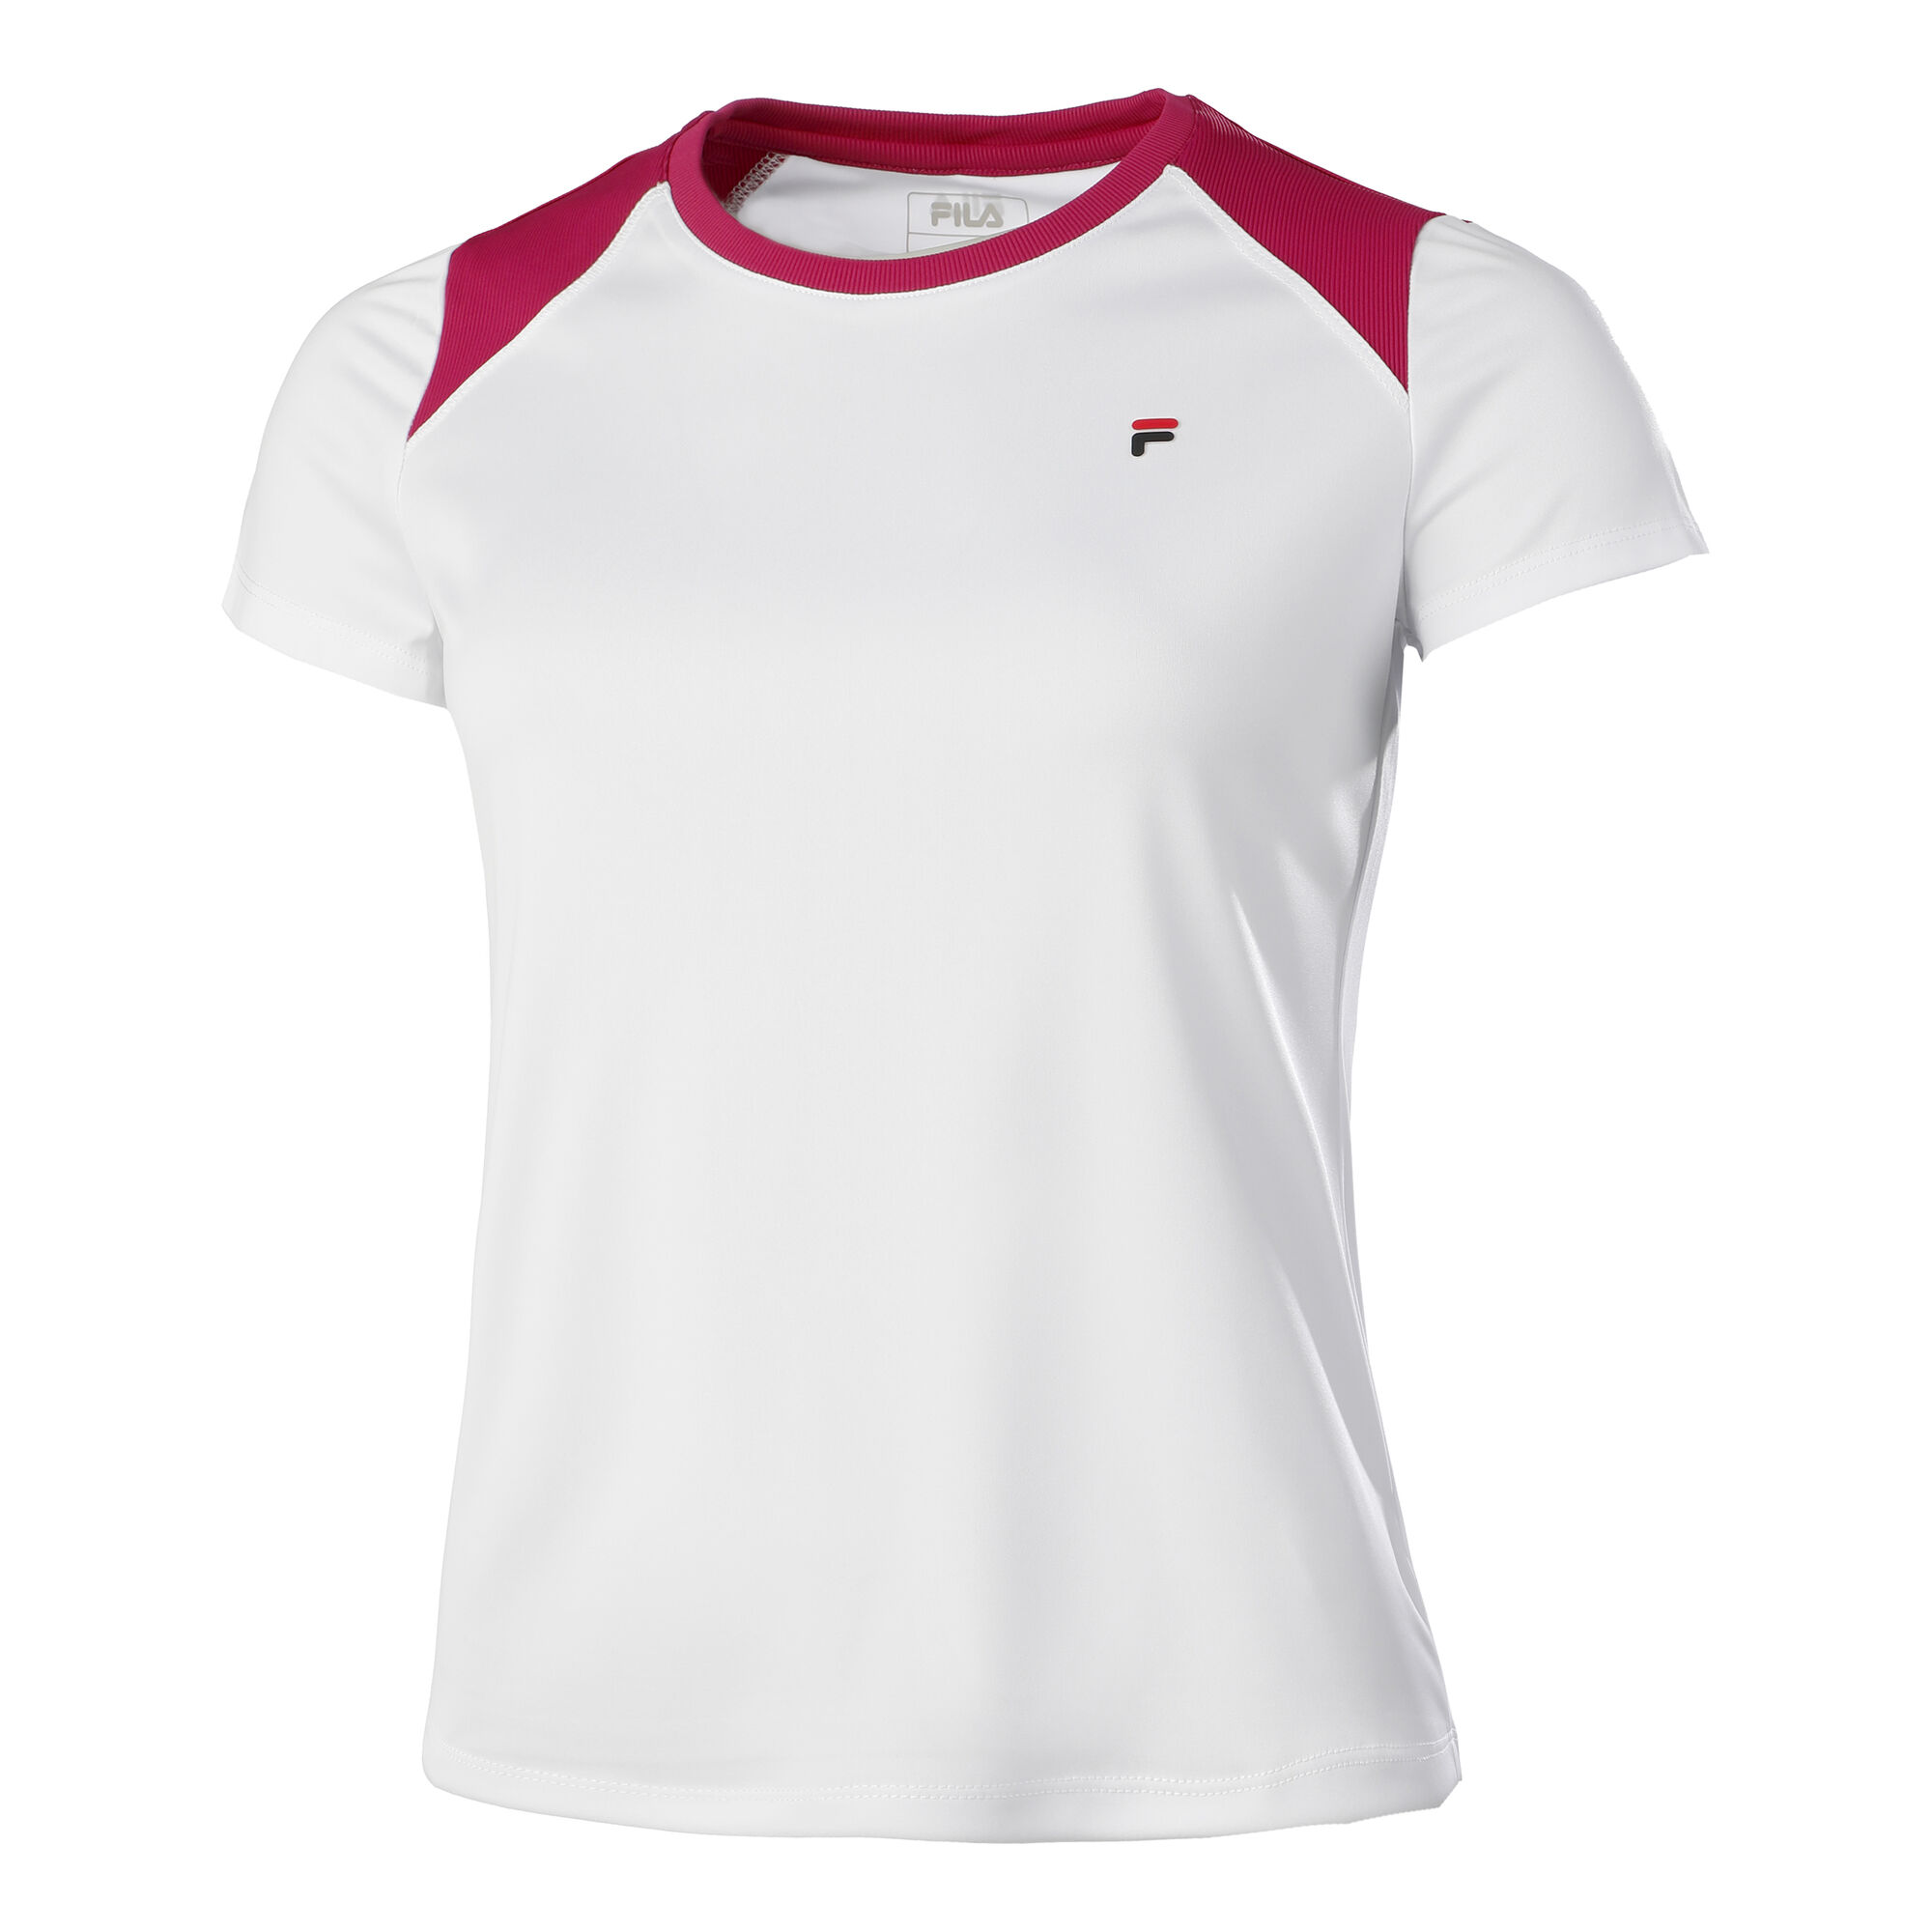 Fila Josephine T-Shirt Damen - Weiß, Lila kaufen | Tennis-Point